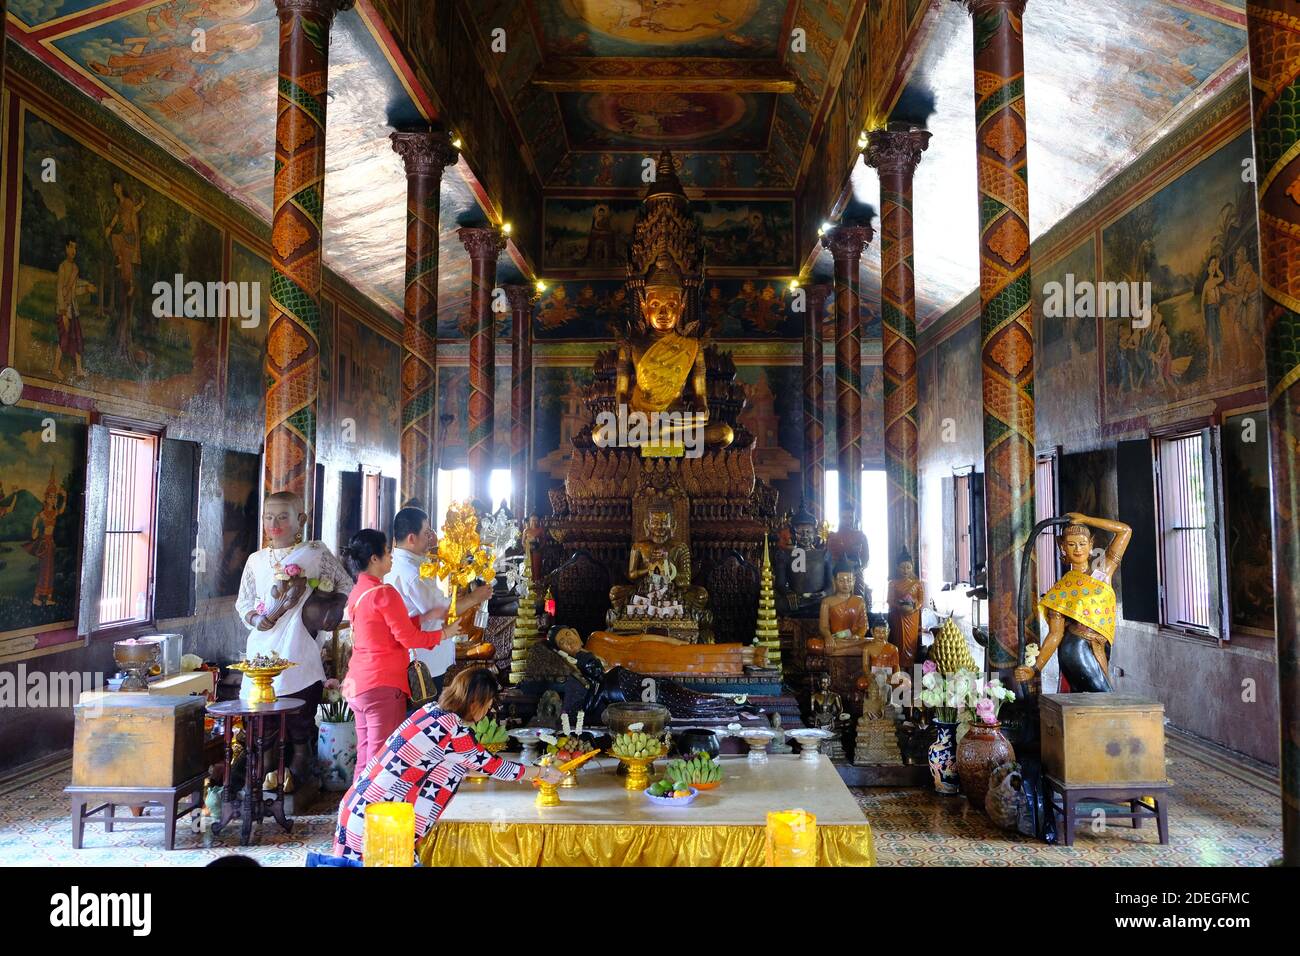 Cambodia Phnom Penh - Wat Langka House of Devotion with golden Buddha statue Stock Photo